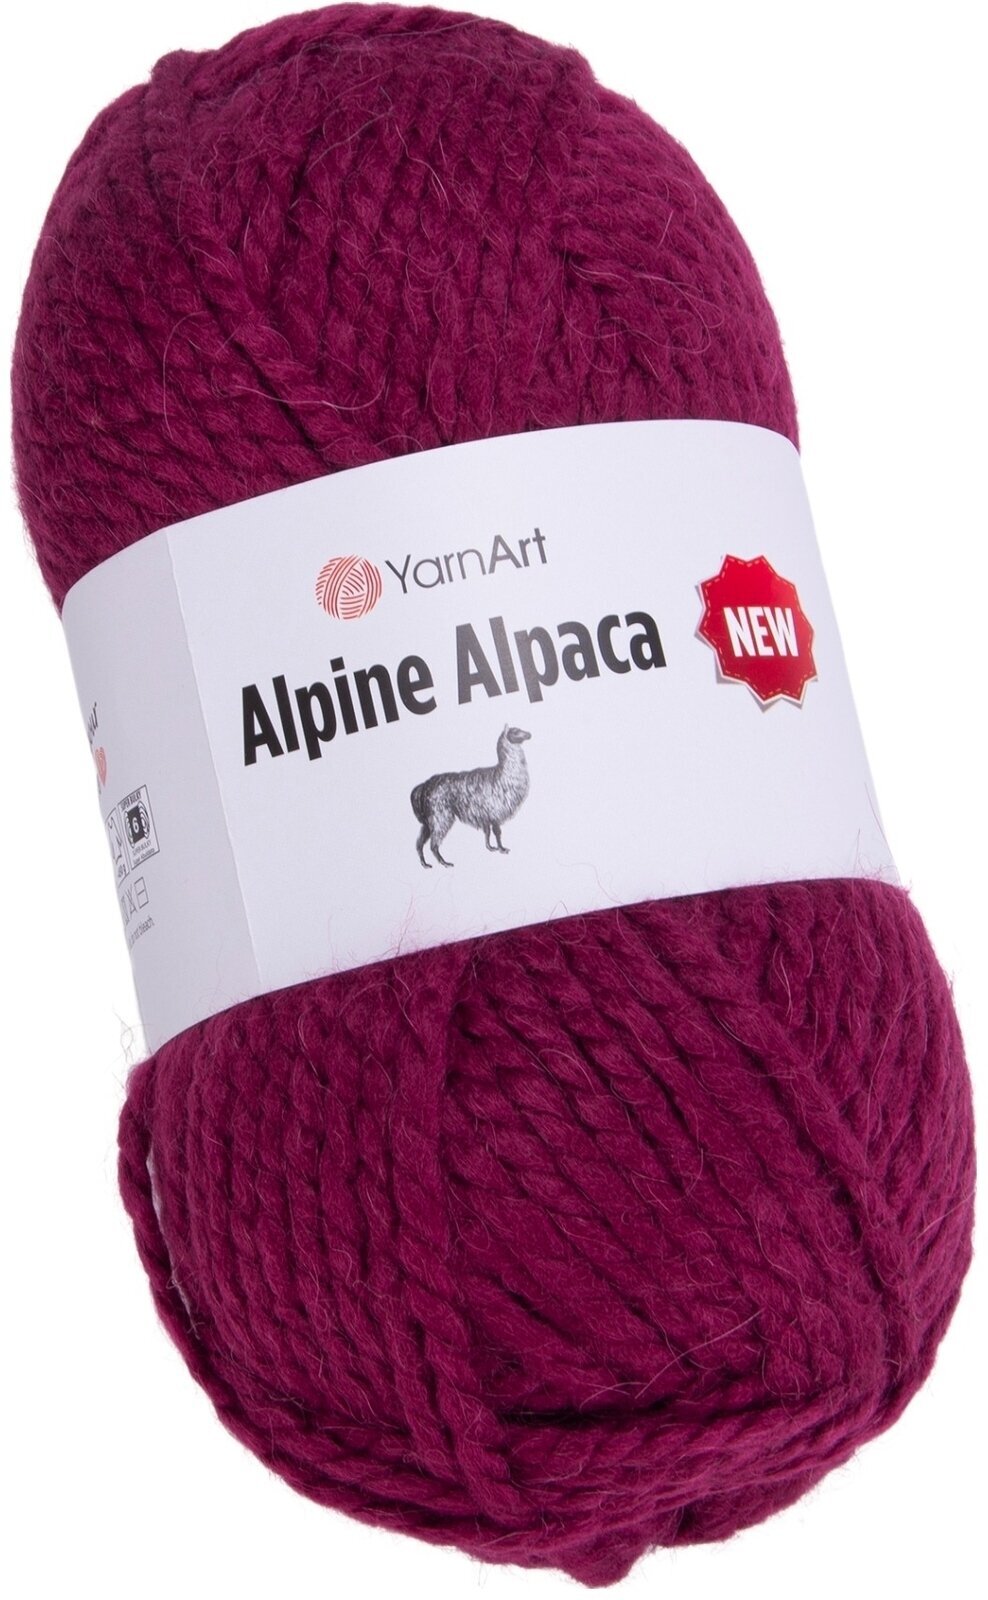 Breigaren Yarn Art Alpine Alpaca 1441 Breigaren